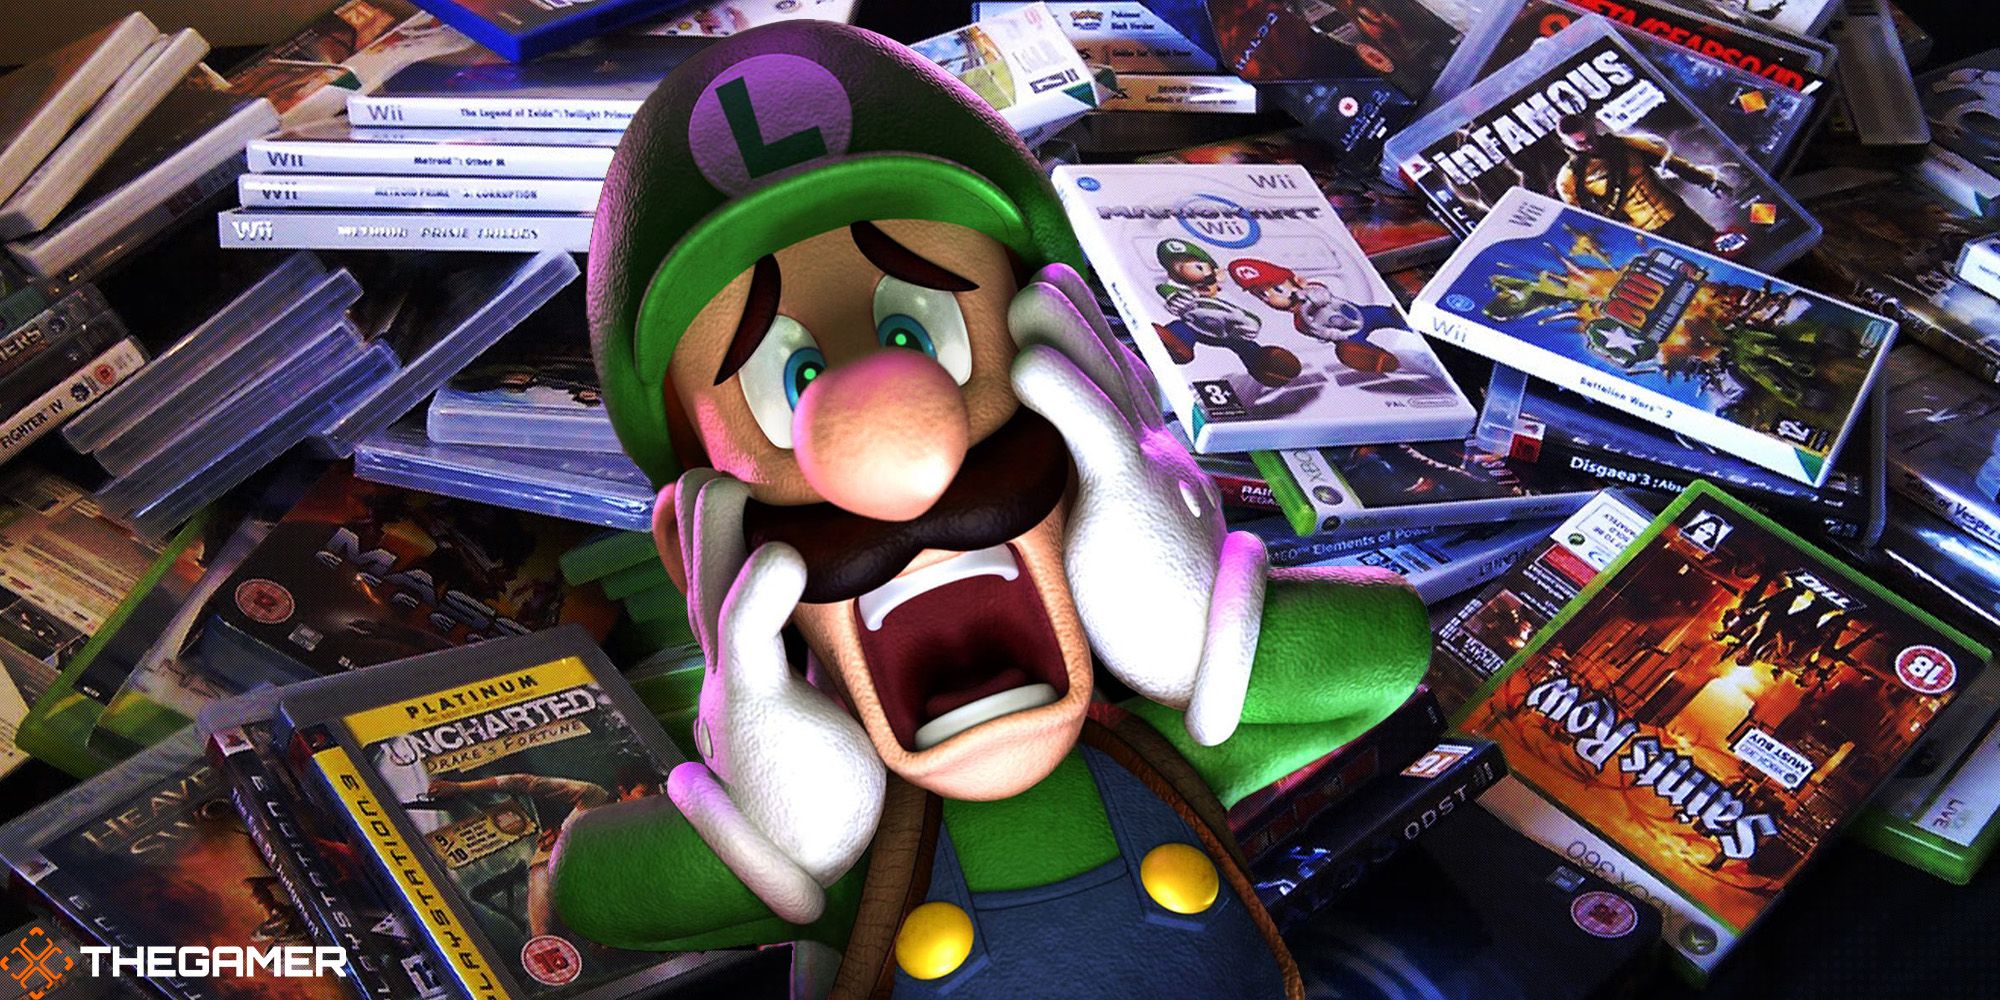 Luigi Shrieks In Terror Over The Abundant Pile Of Unorganized Games Before Him. Custom image for TG.